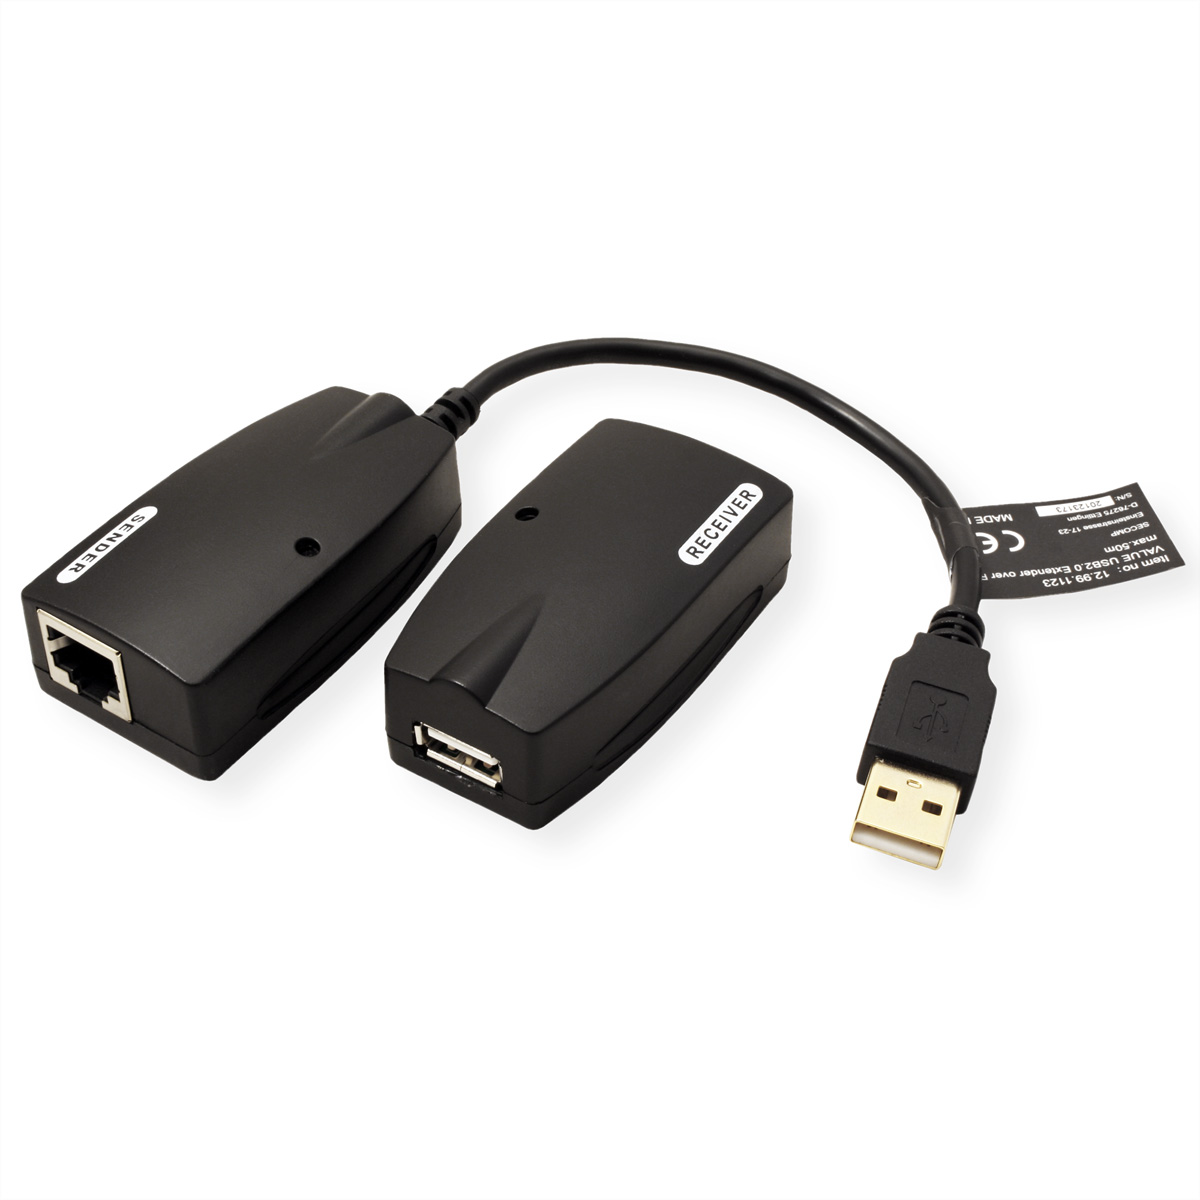 VALUE USB 2.0 Verlängerung 50m RJ45, max. über USB-Verlängerung